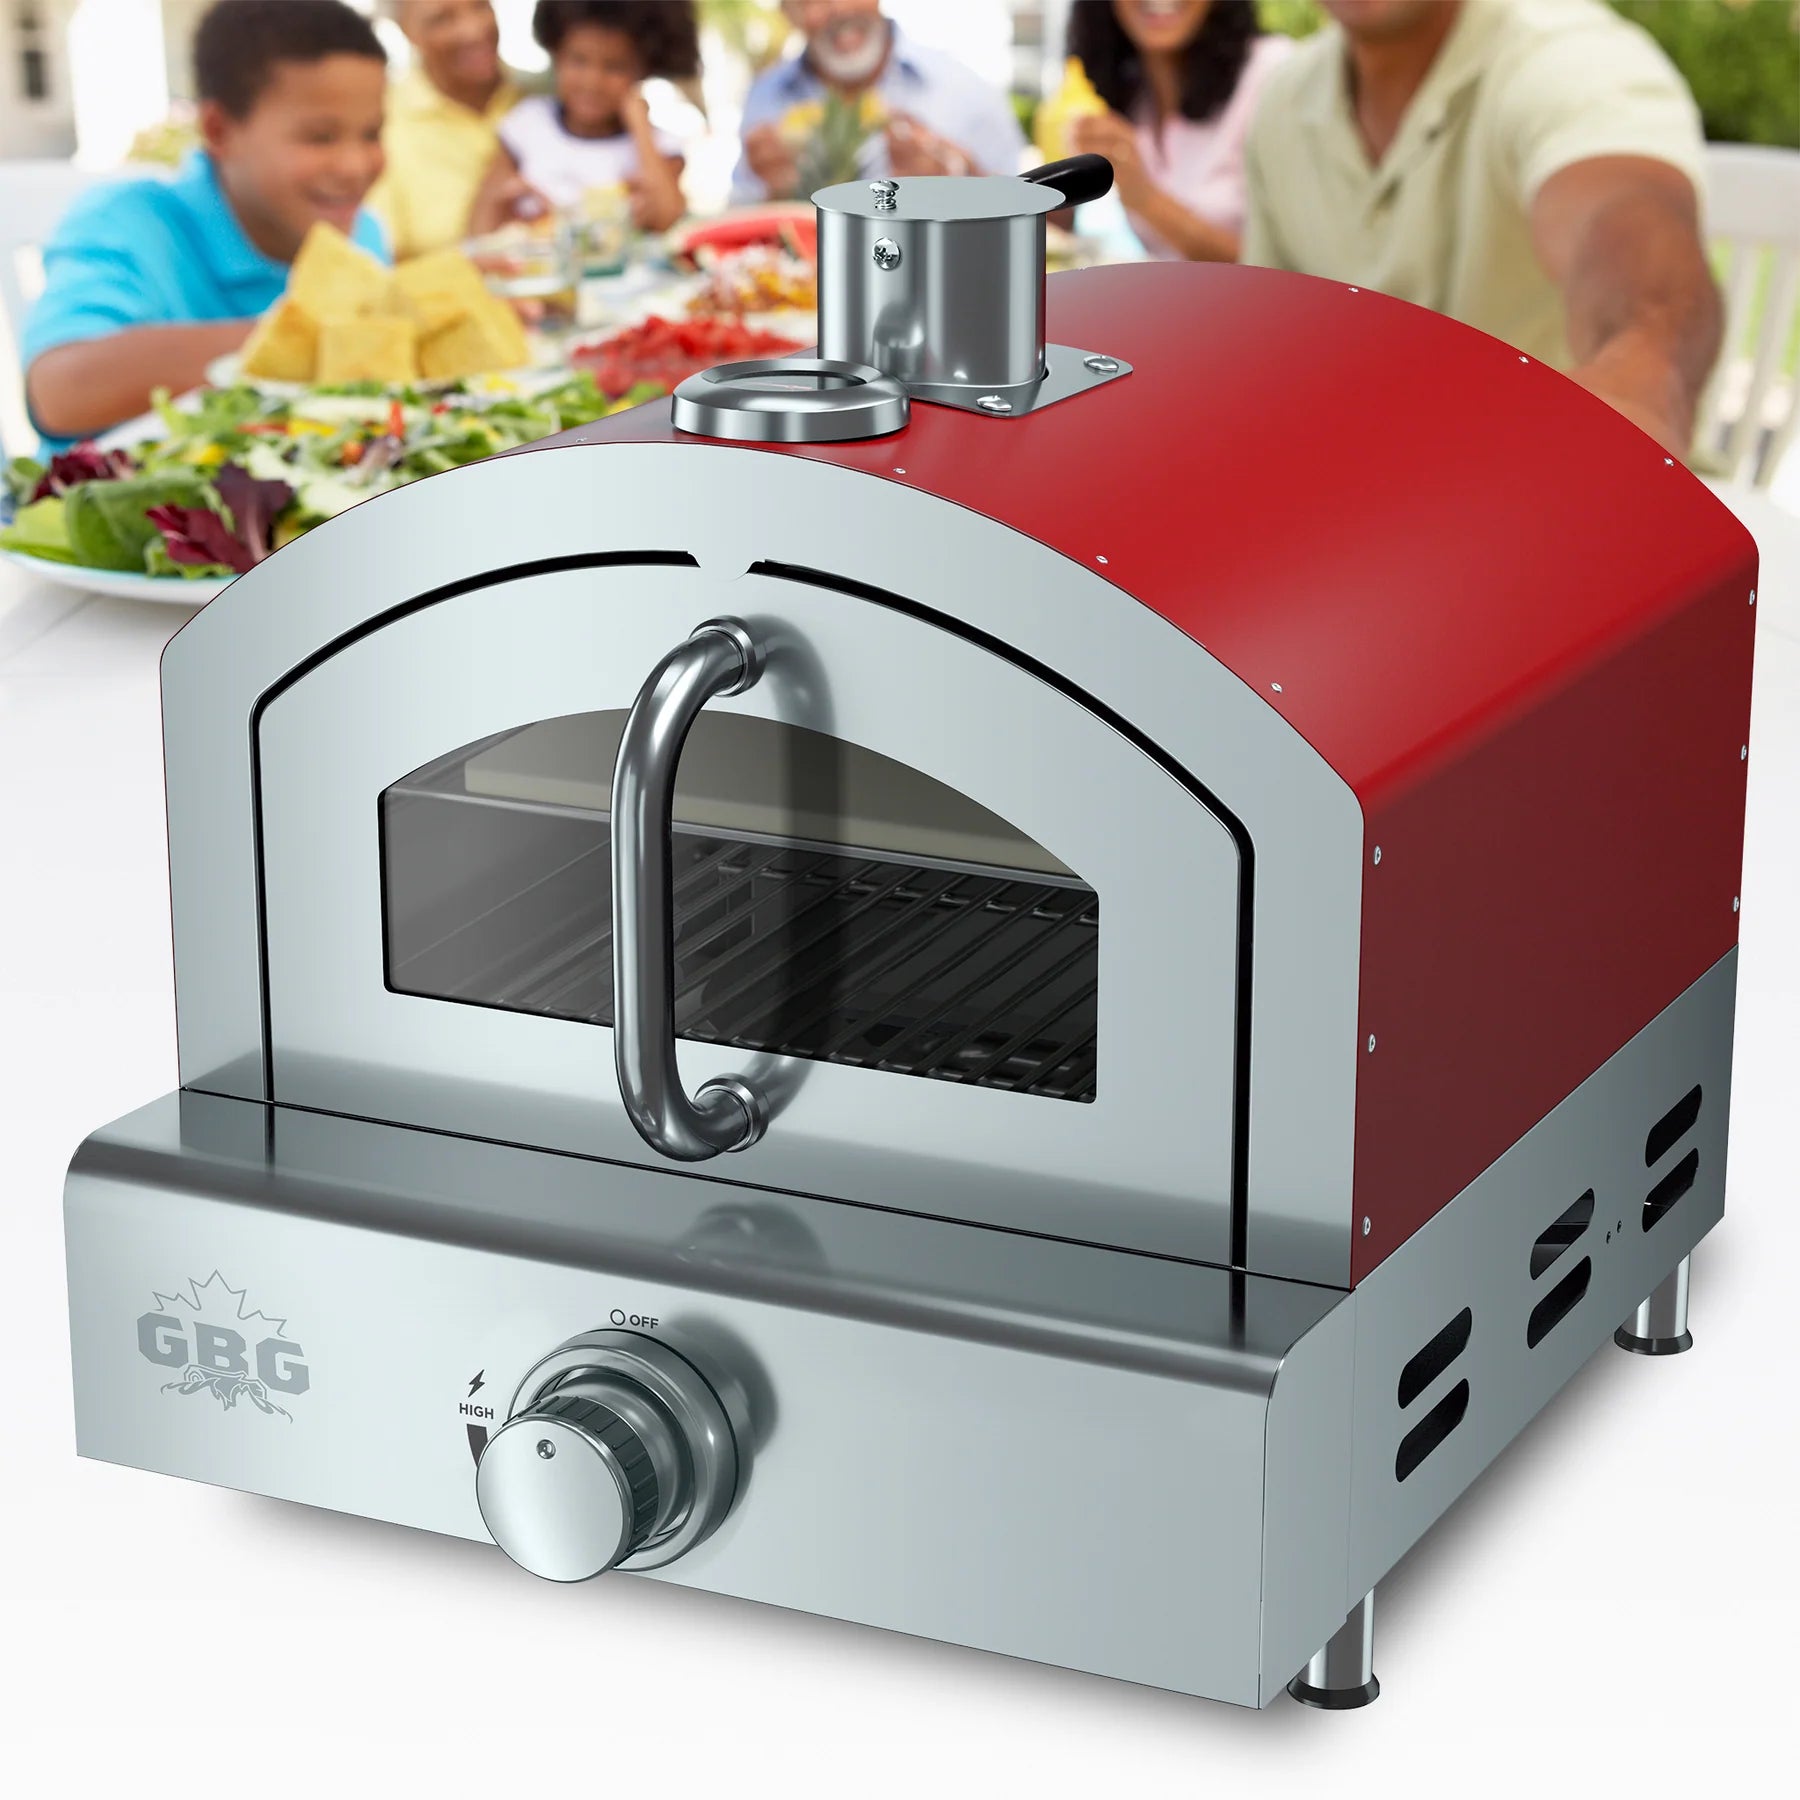 Deluxe Portable Propane Outdoor Pizza Oven